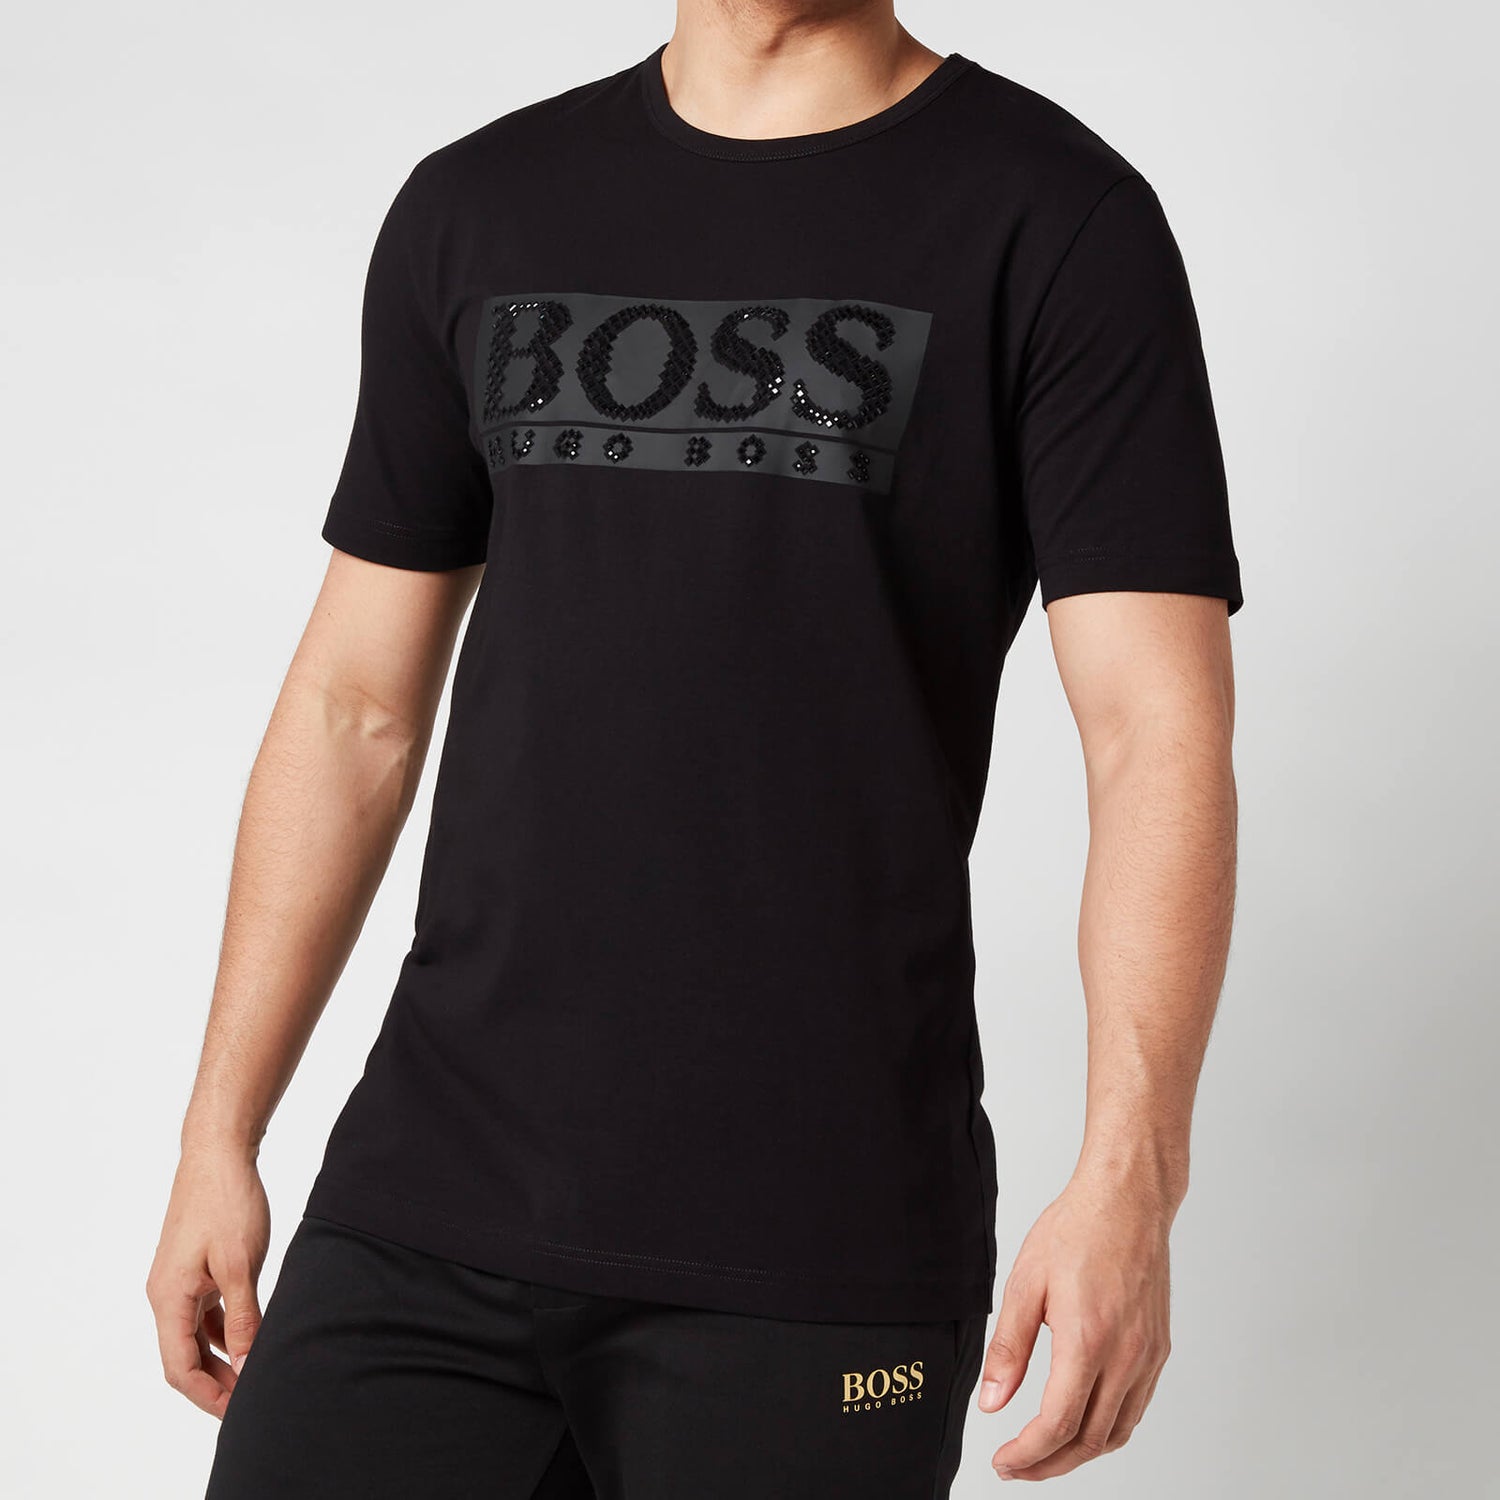 BOSS Athleisure Men's Diamond 1 T-Shirt - Black